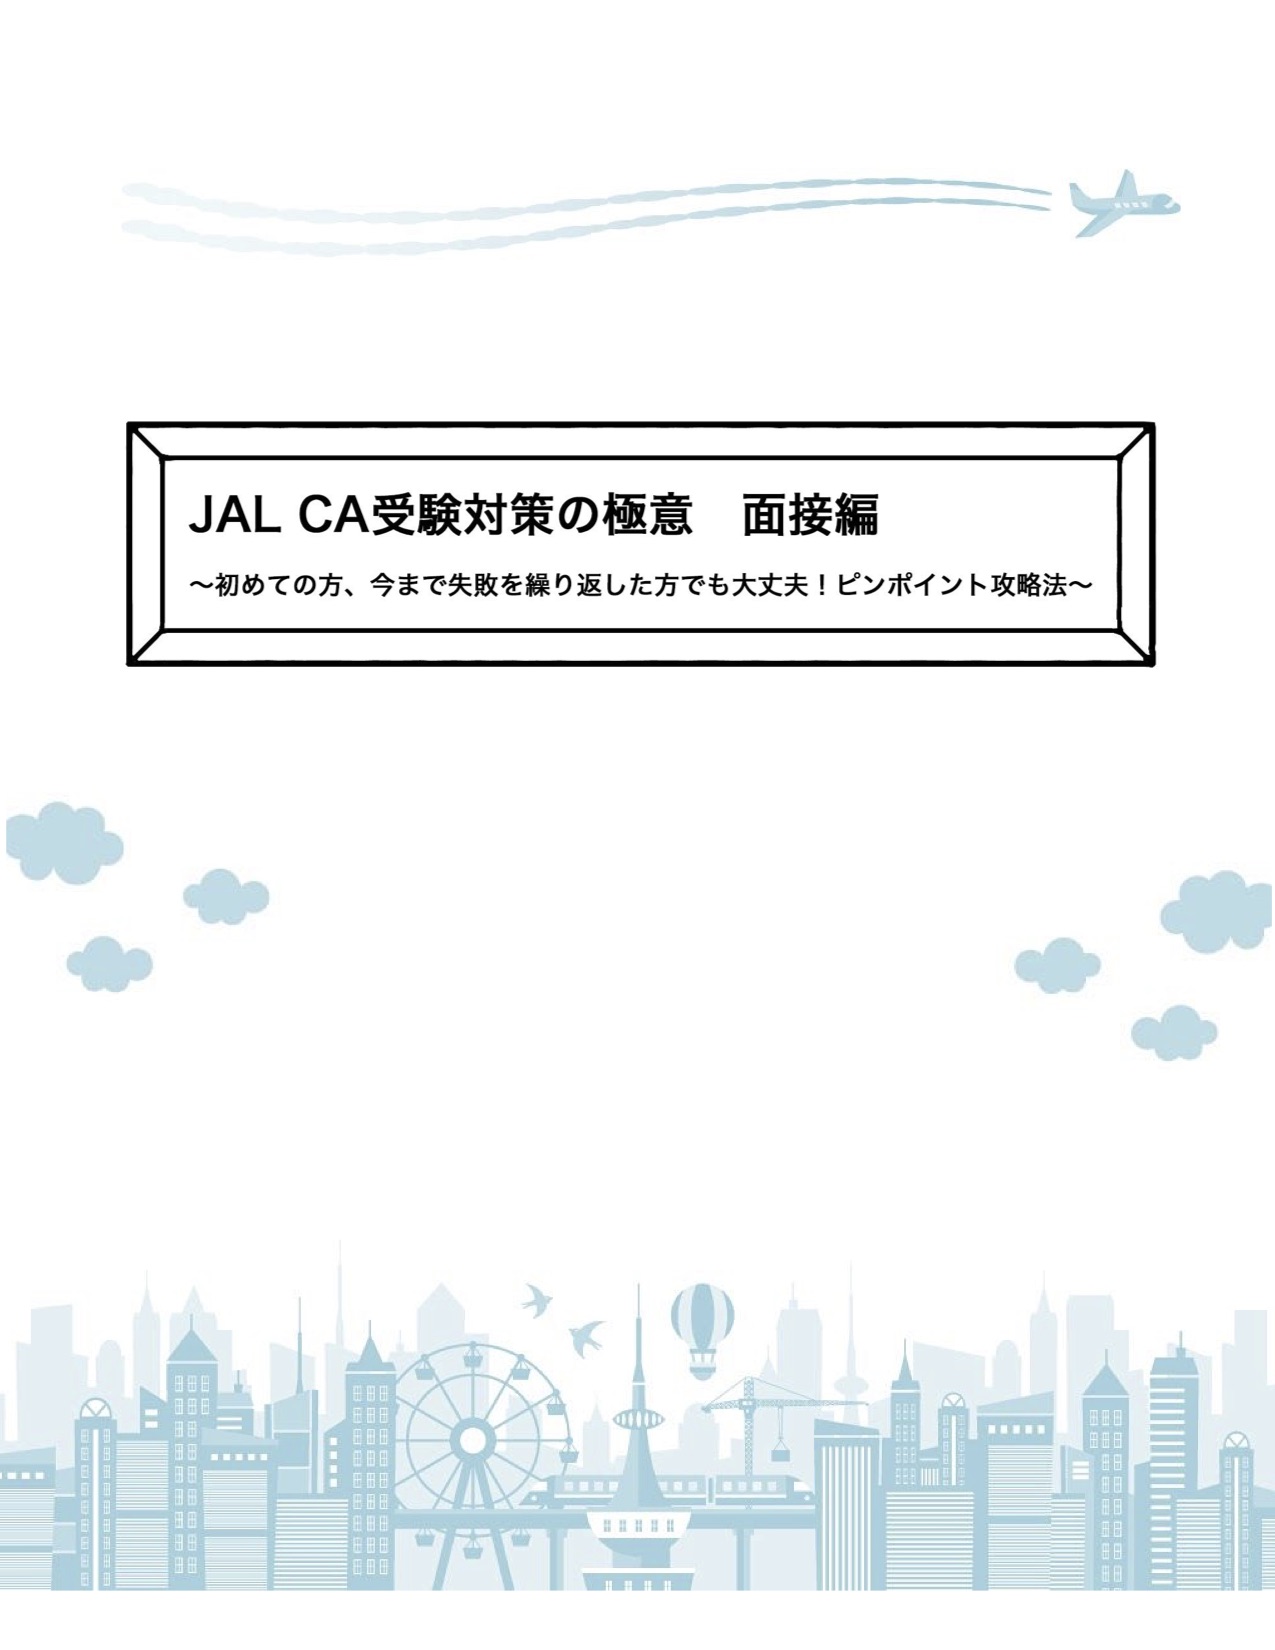 ANA、JAL、外資系オンラインCA客室乗務員受験対策《CA.jp》のオリジナルテキスト